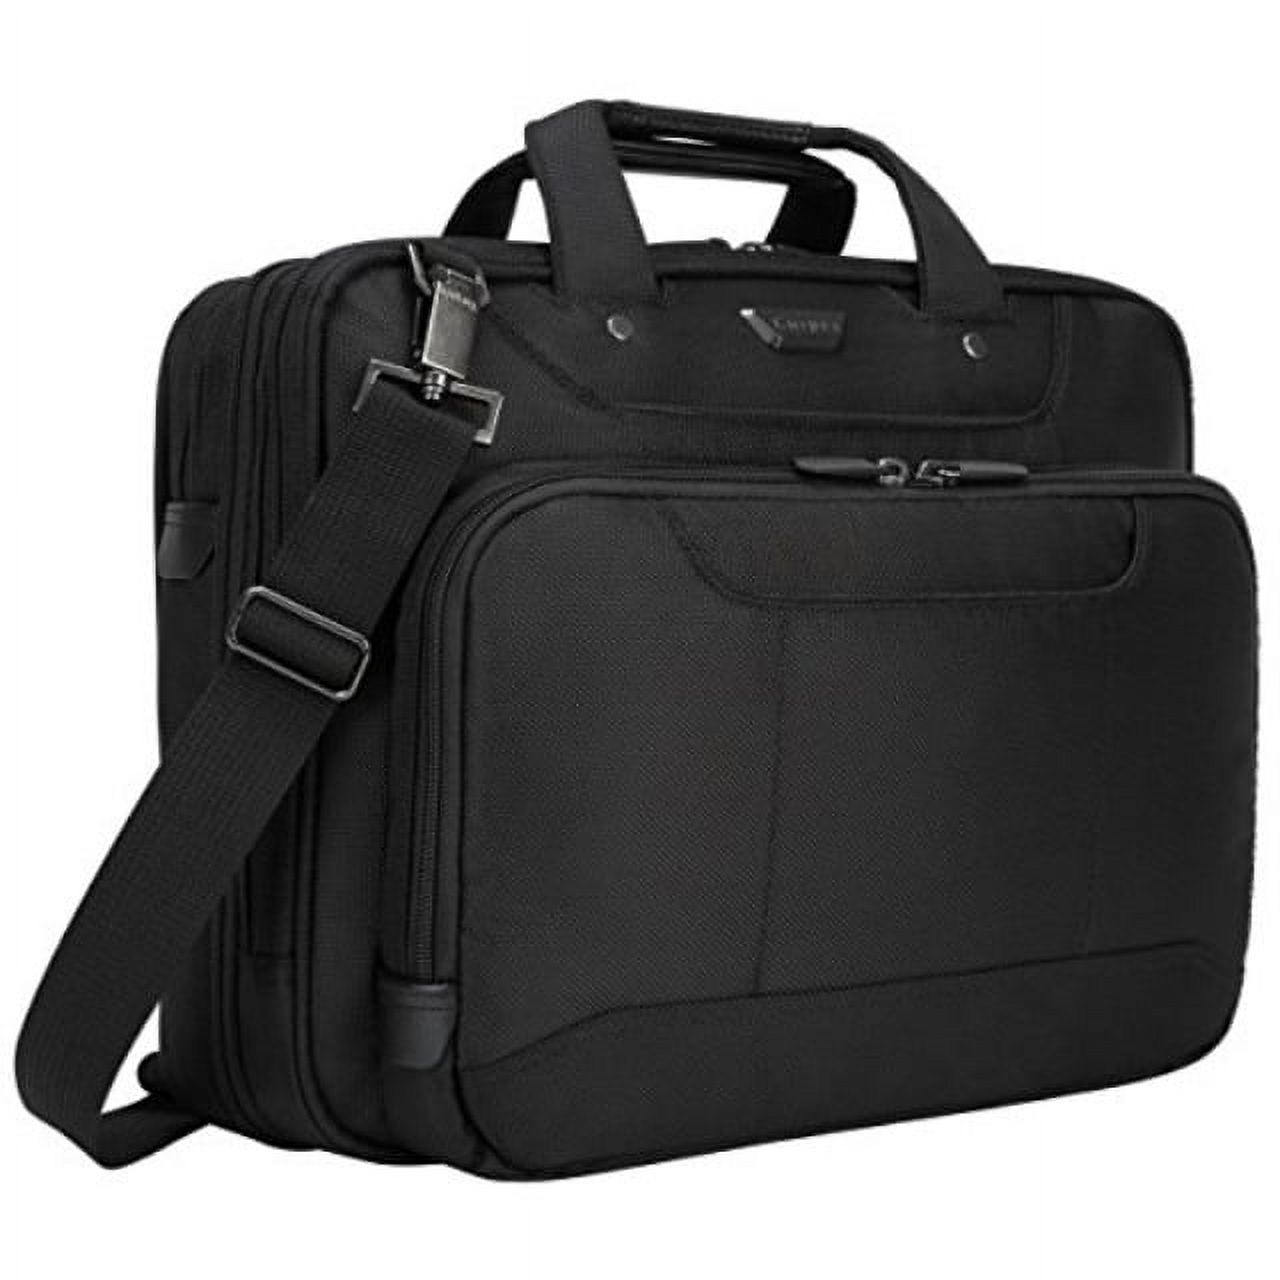 targus corporate traveler checkpoint-friendly traveler laptop case for 14-inch laptop, black (cuct02ua14s) - image 1 of 13